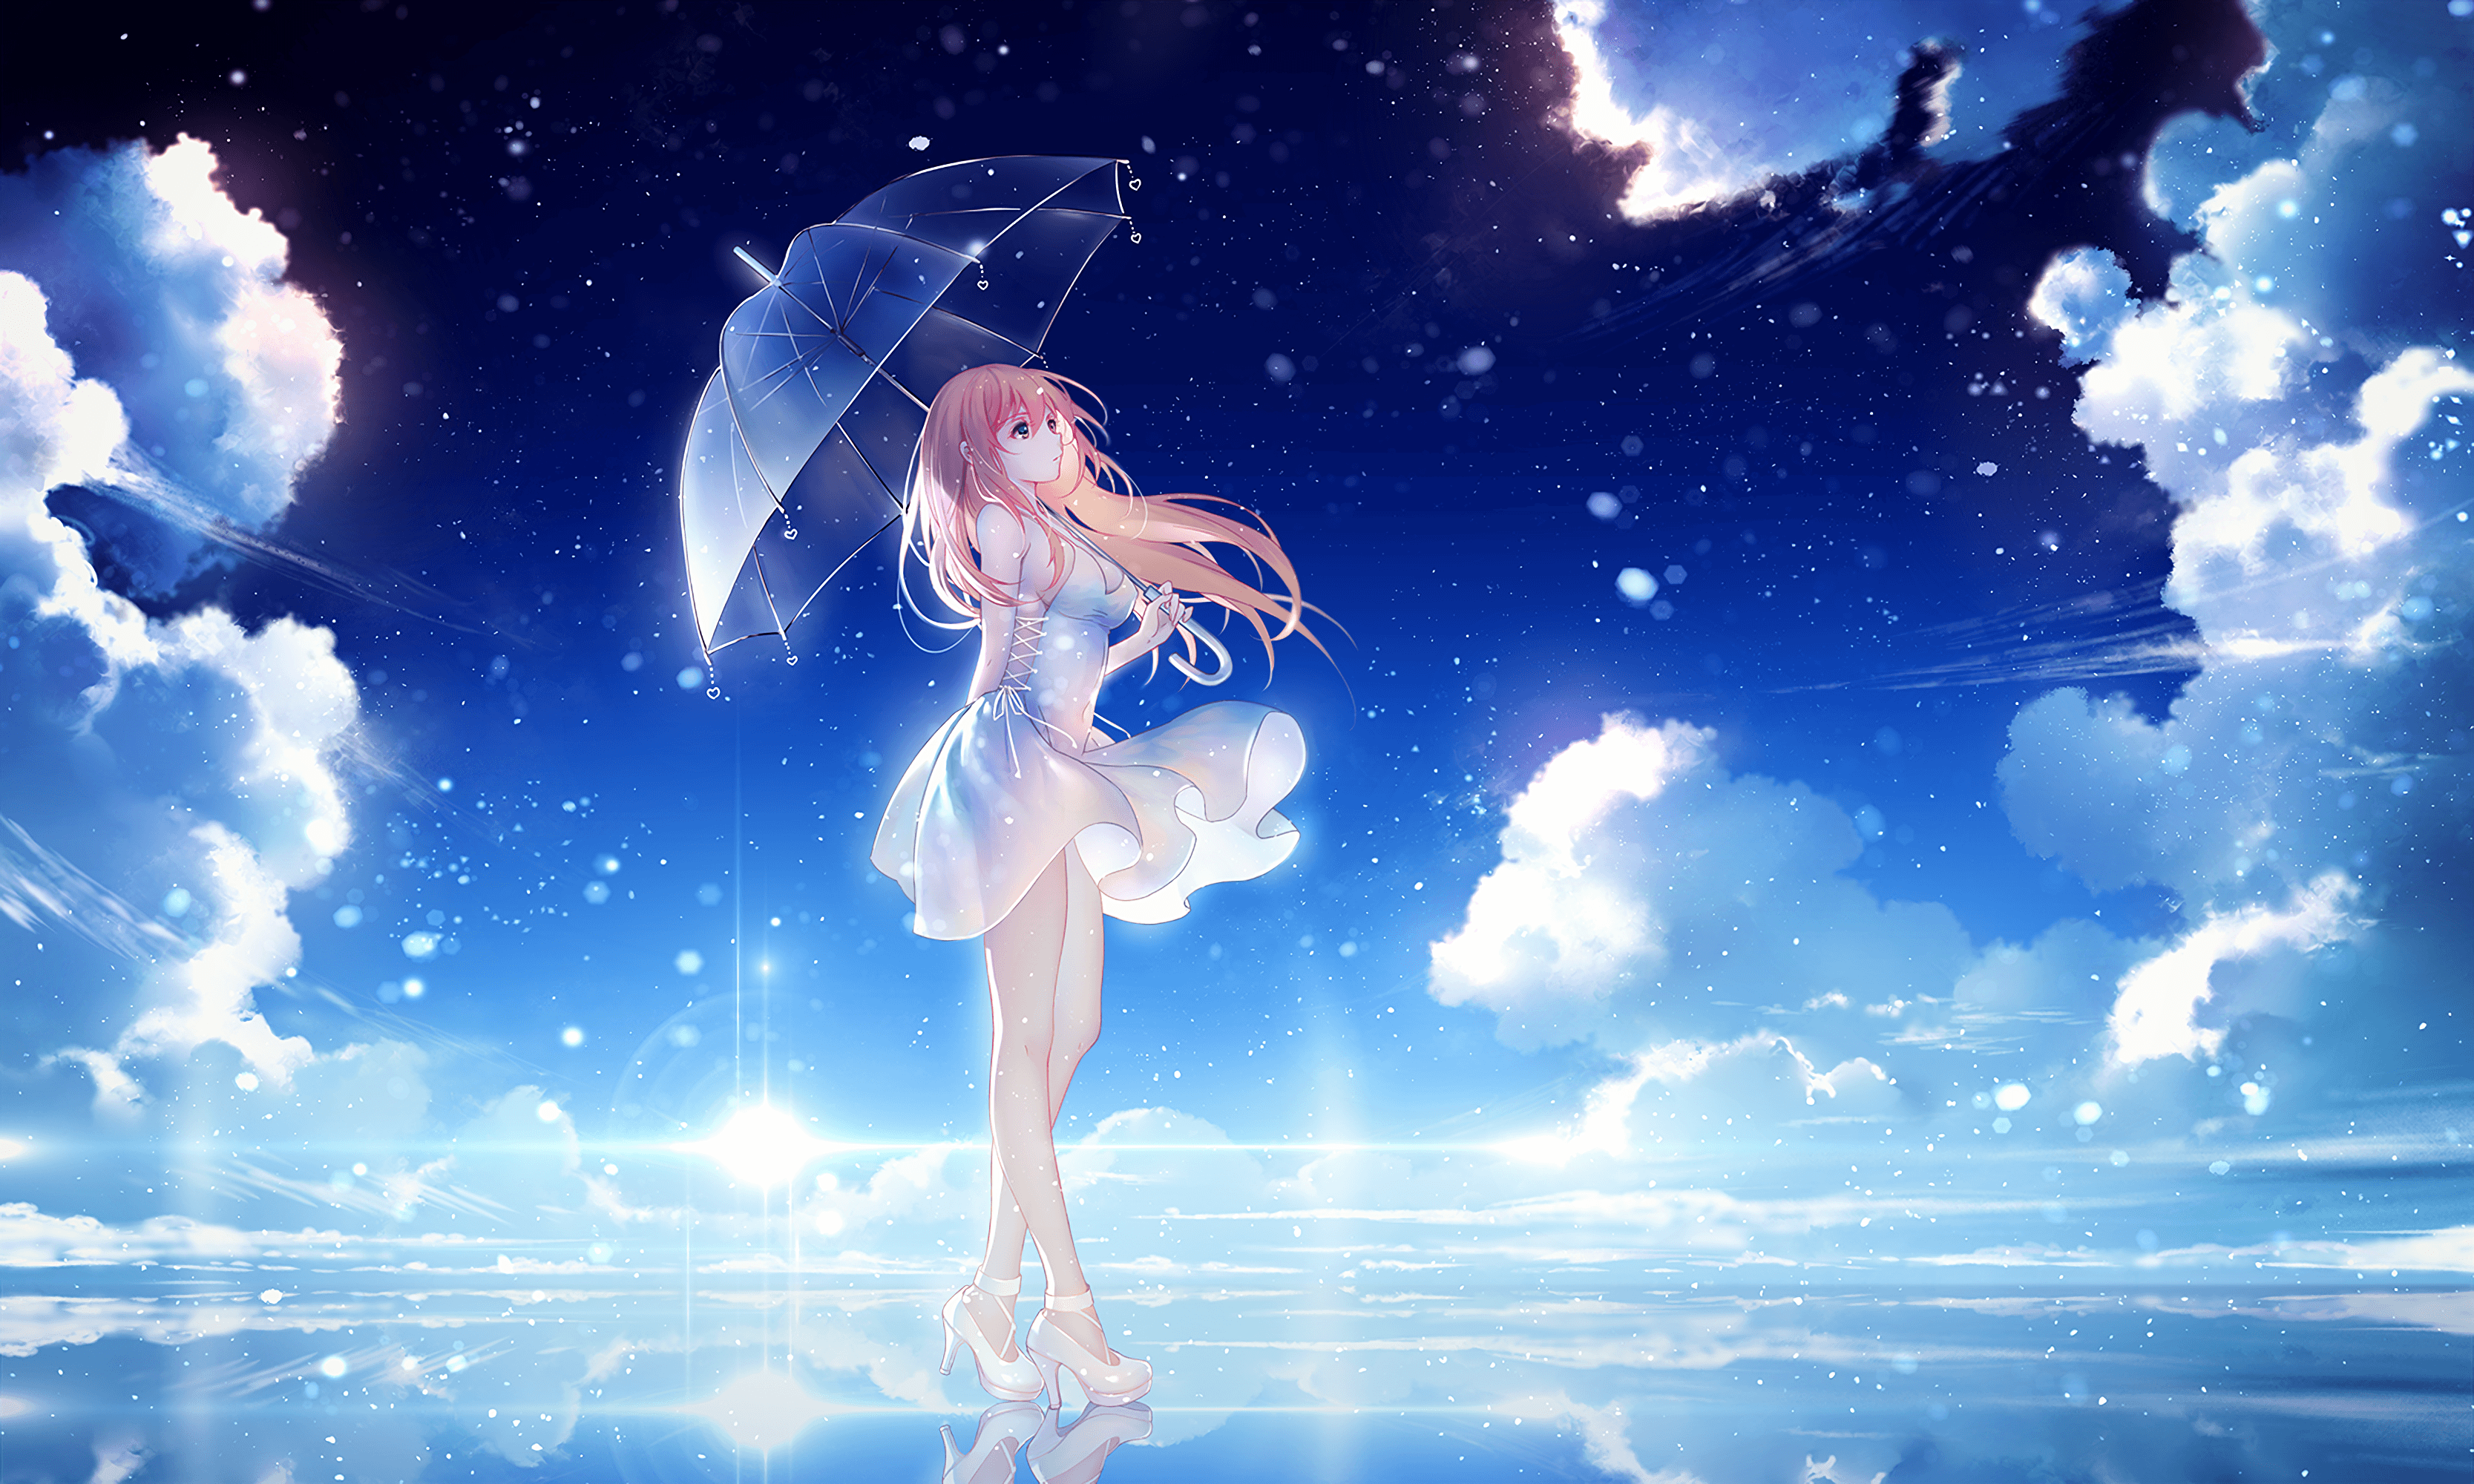 Anime Girl Walking With Umbrella Art Wallpapers